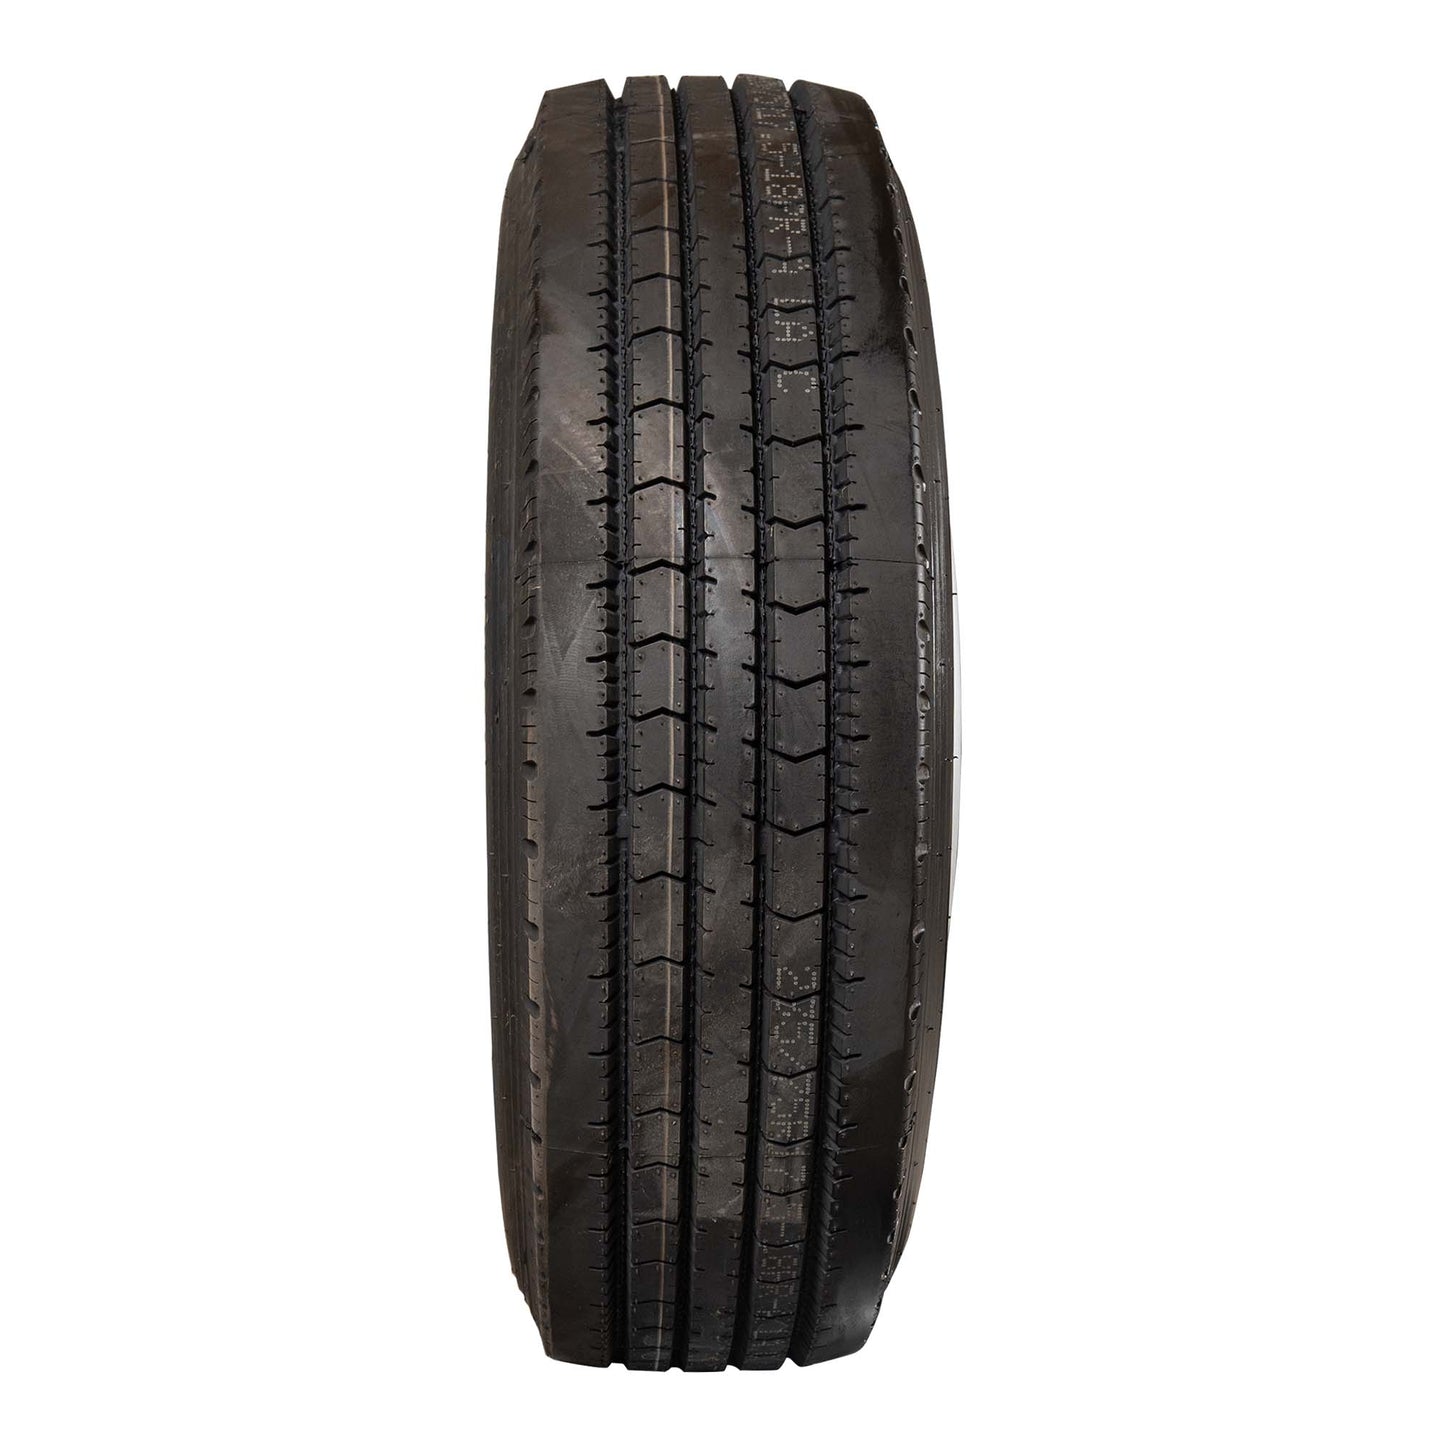 Goodride 17.5" 18 ply Radial Trailer Tire & Wheel - ST 235/75R17.5 8x6.5 Lug (Silver Dual)